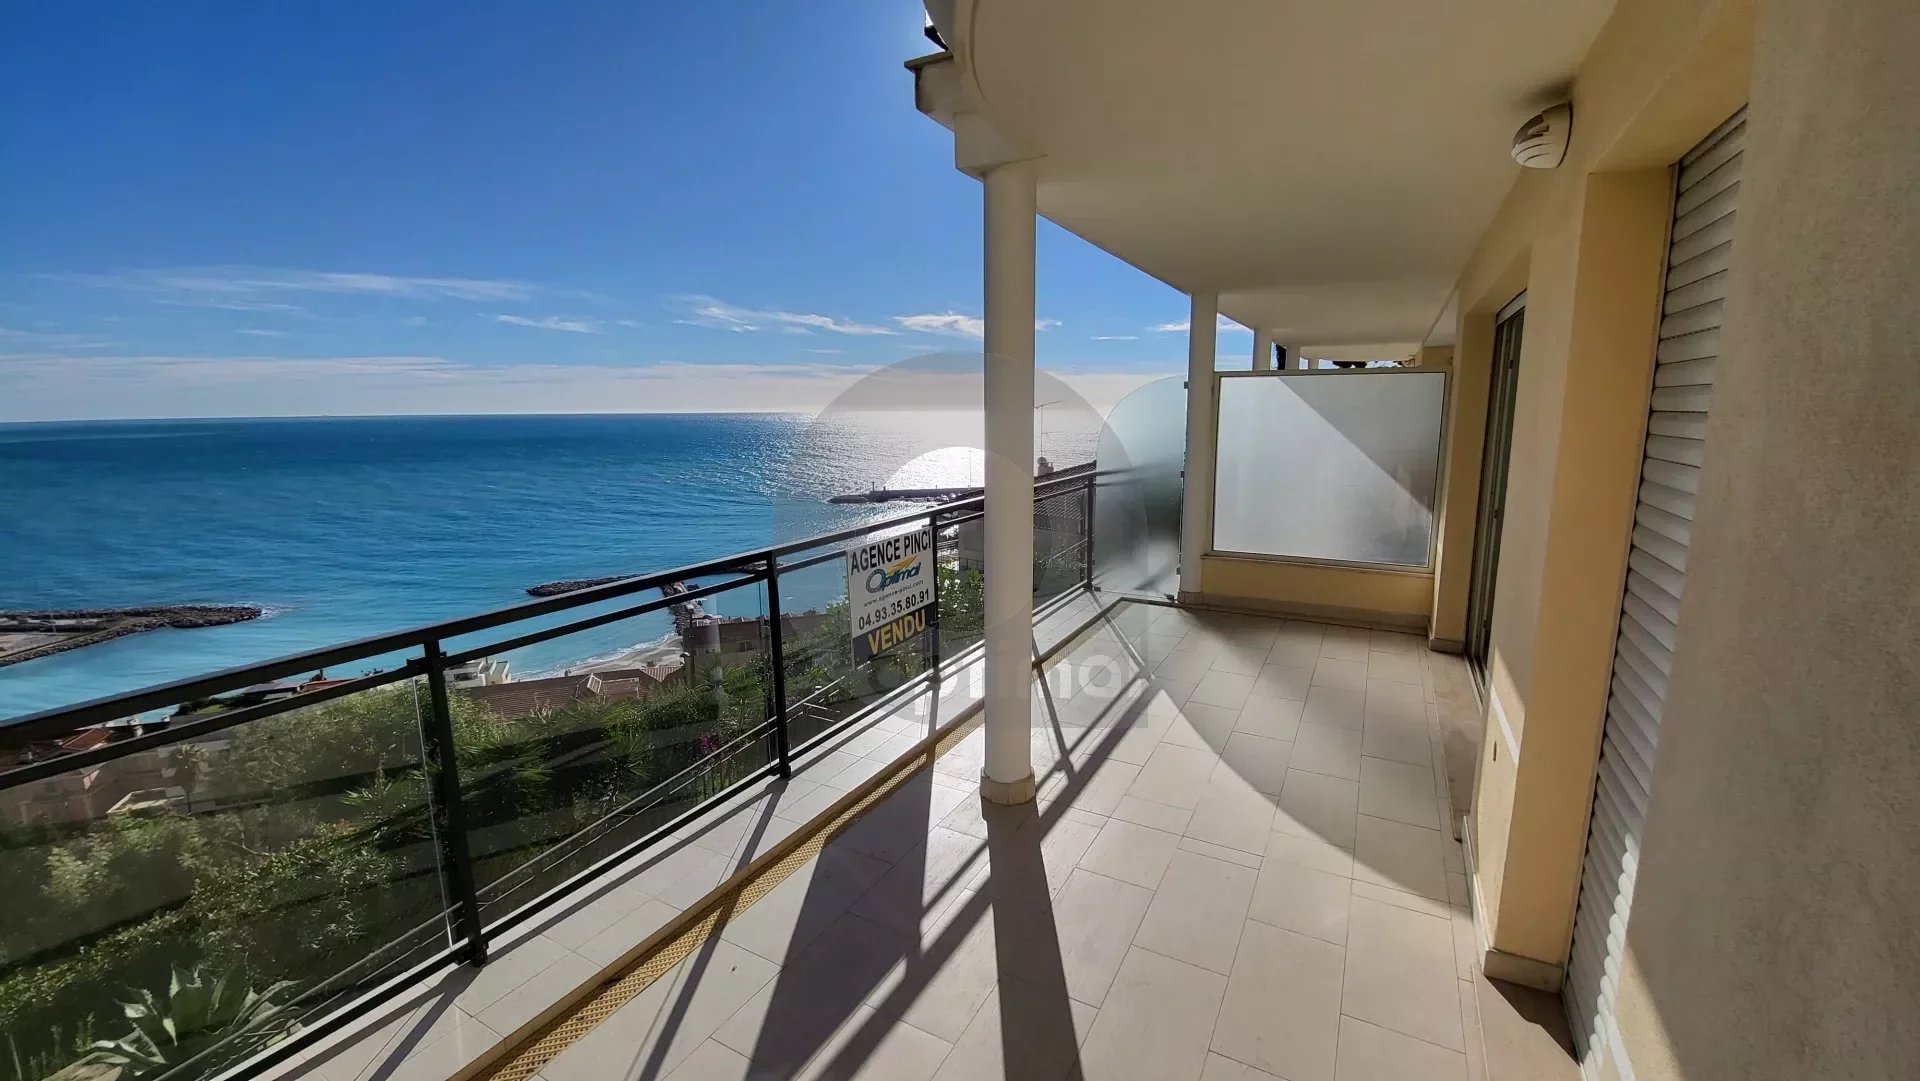 Menton - Apartment with amazing seaview